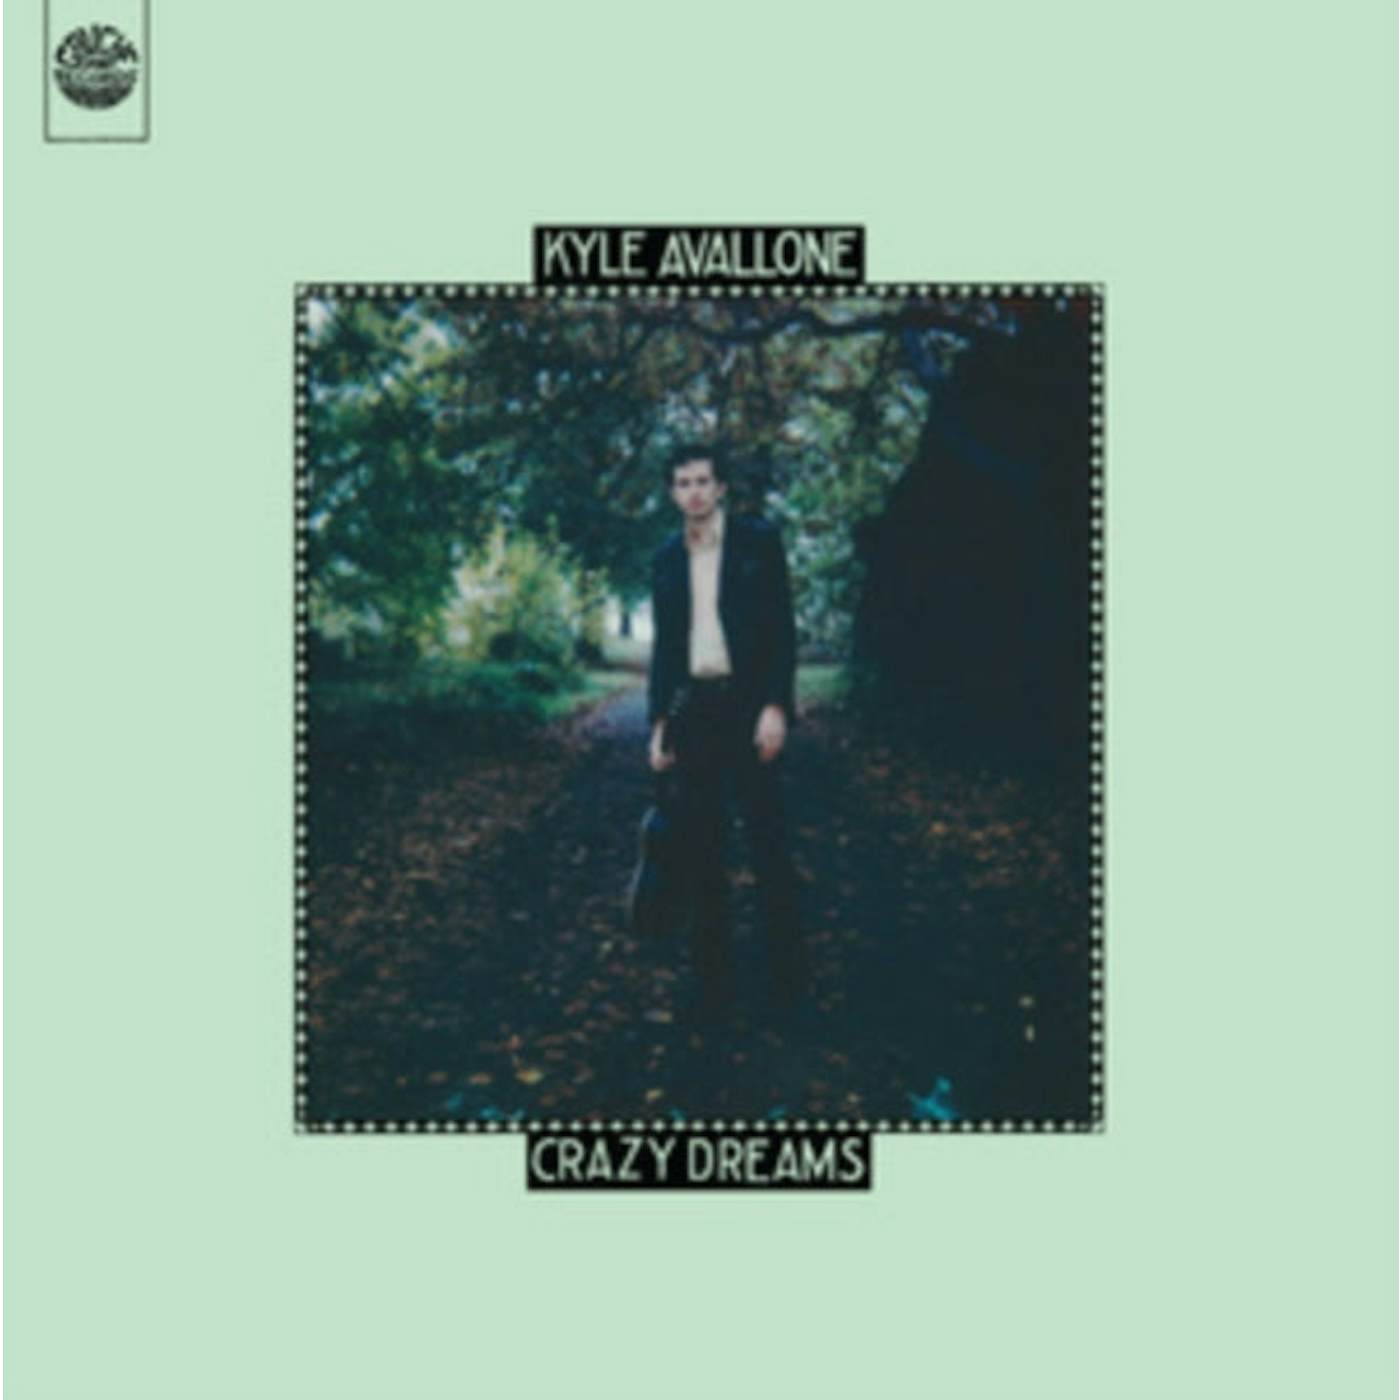 Kyle Avallone LP - Crazy Dreams (Vinyl)